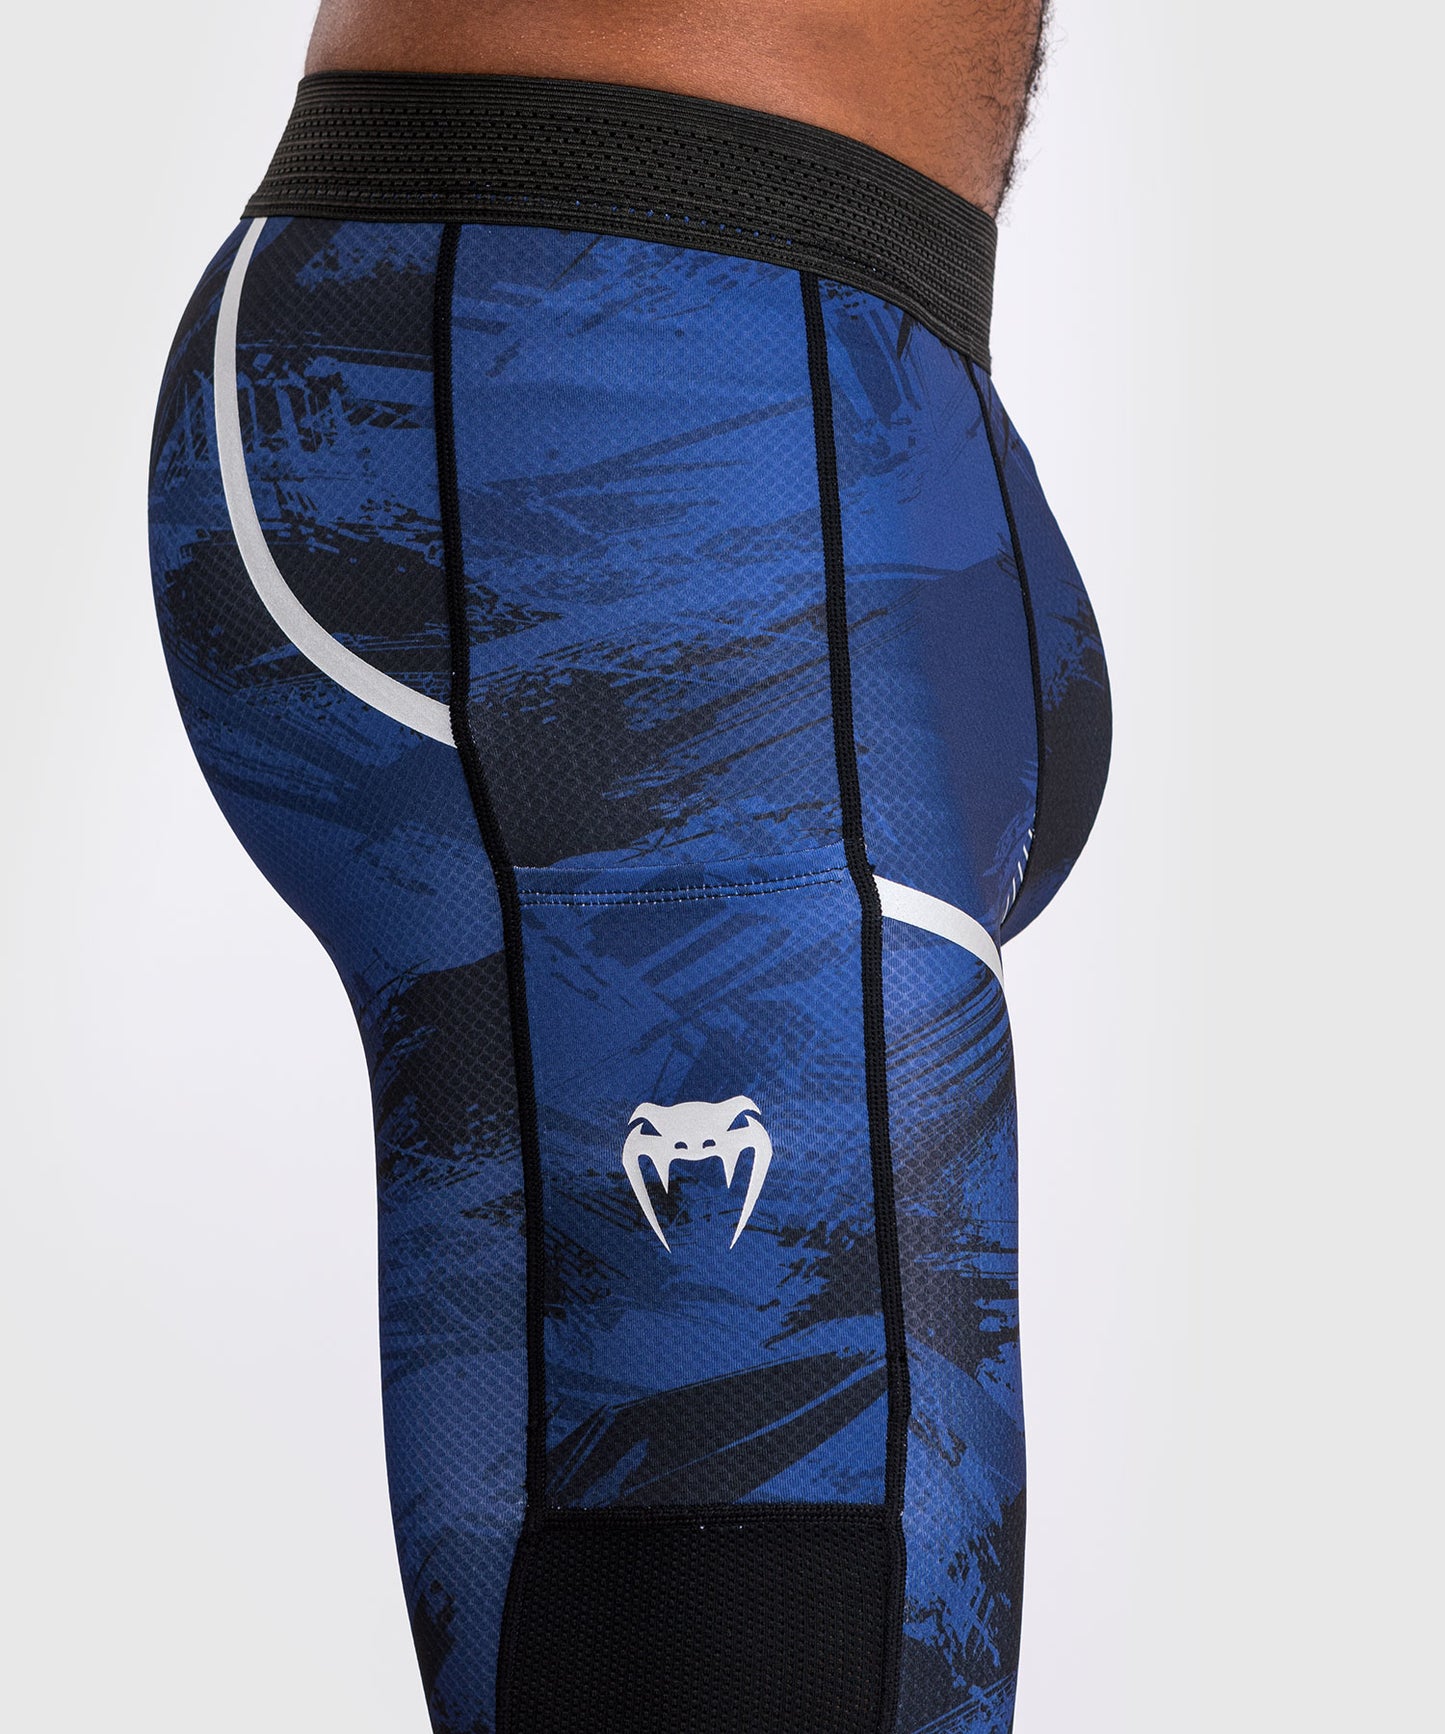 Pantalon de compression Venum Electron 3.0 - Bleu marine